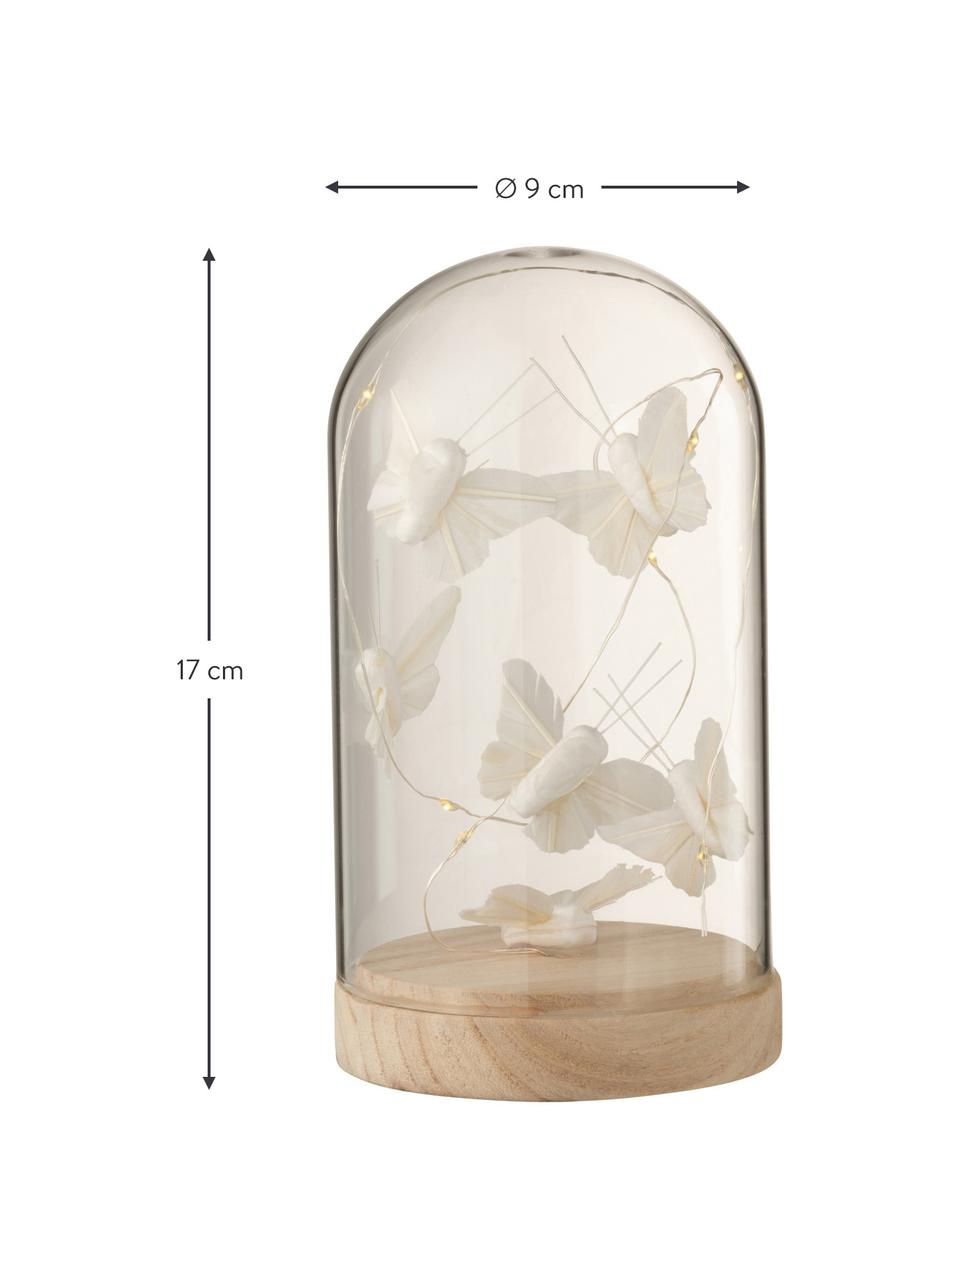 Deko-Objekte LED Bell, Glas, Holz, Weiß, Goldfarben, Ø 9 x H 17 cm